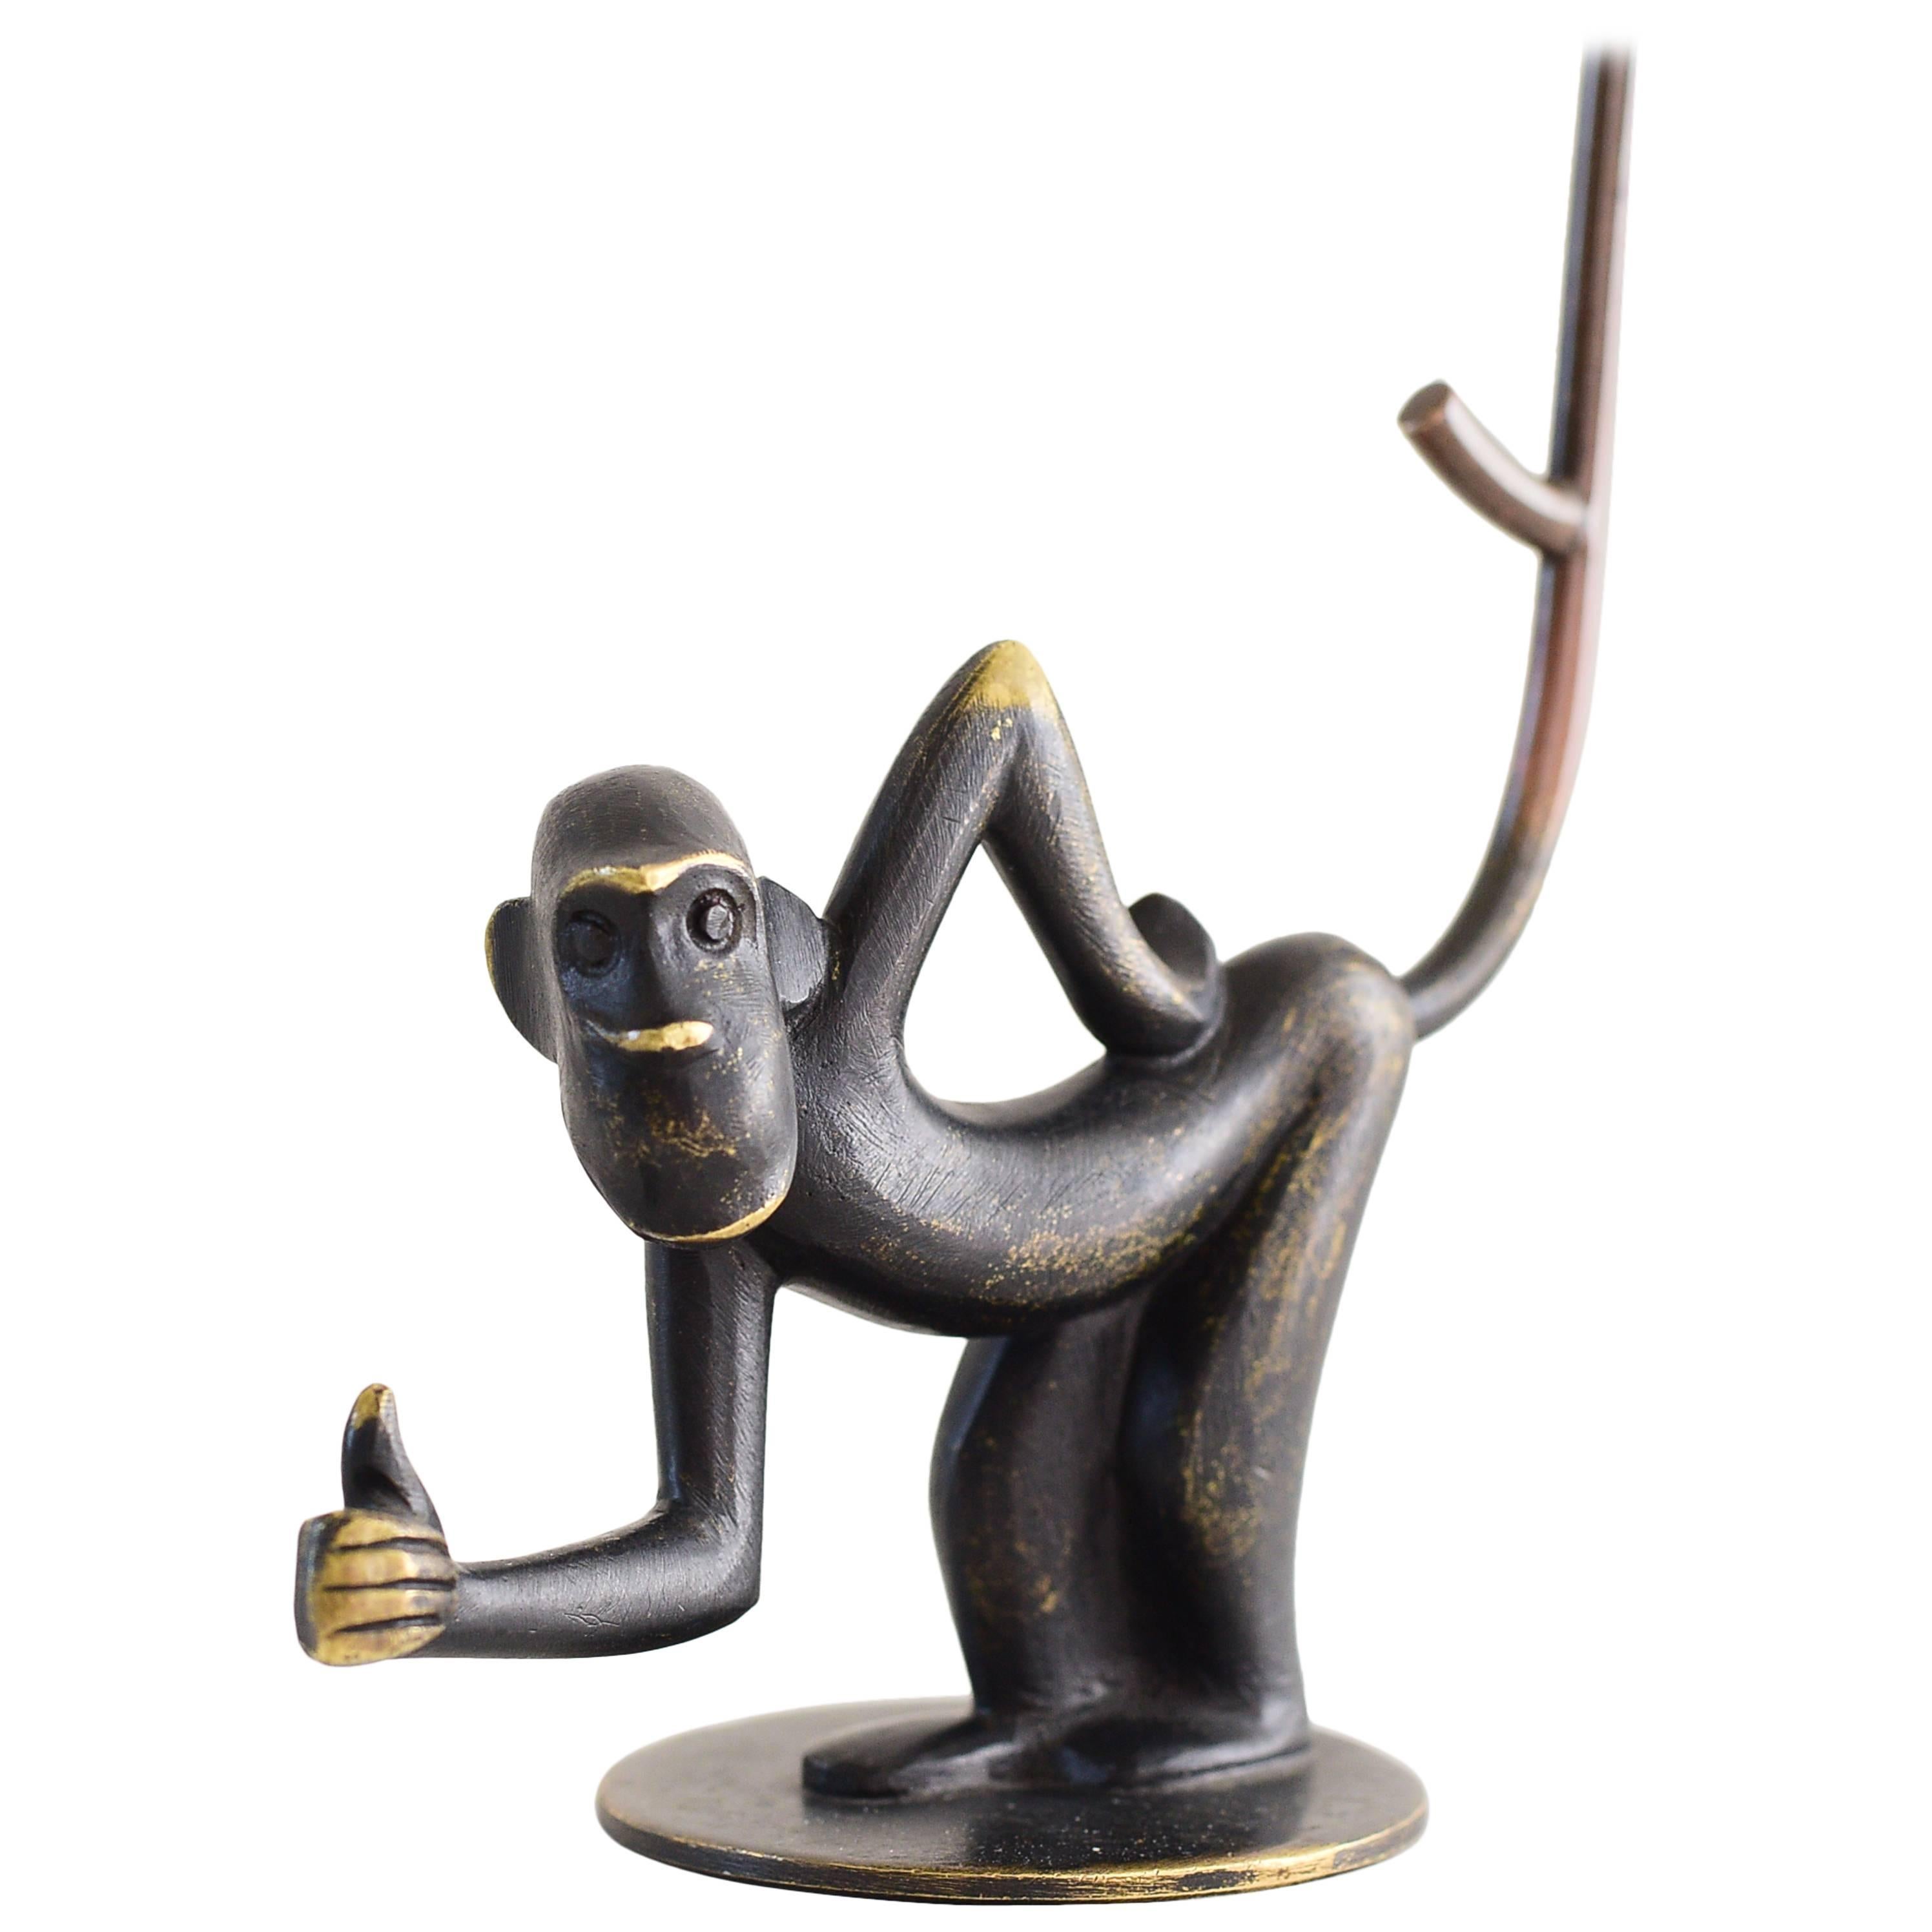 Brass Monkey Figurine Pretzel Holder, Ring Holder by Richard Rohac